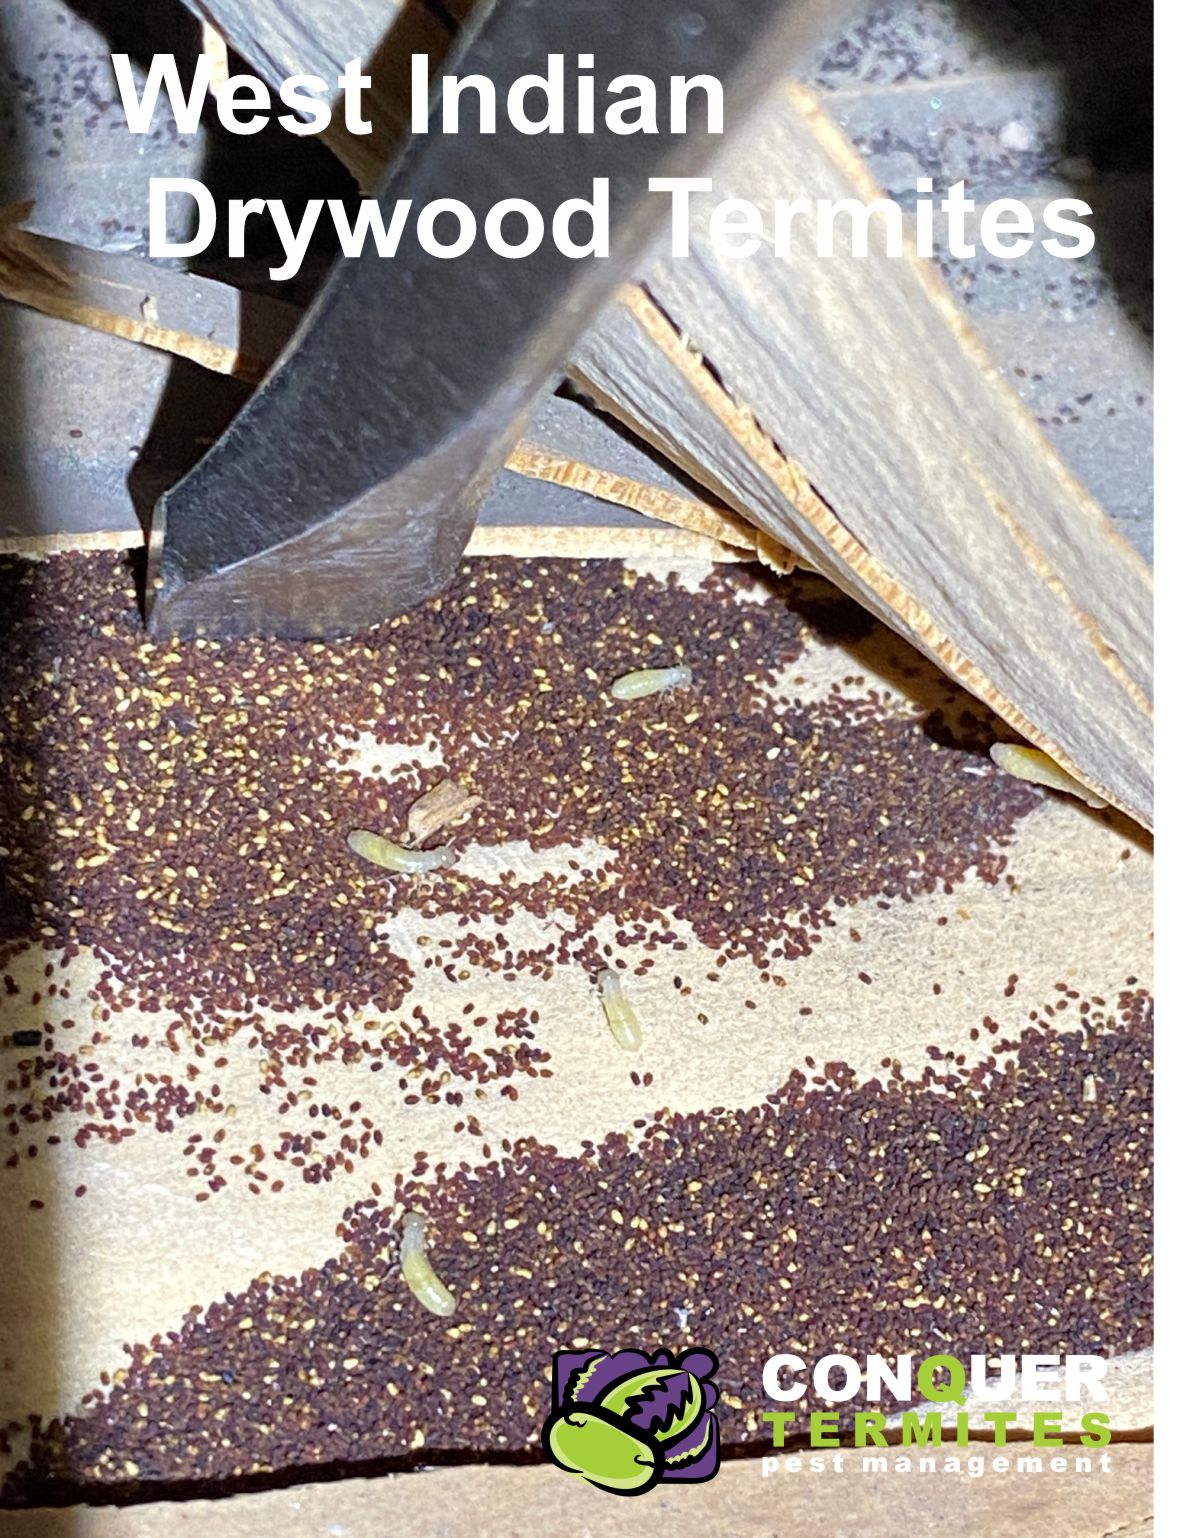 What do West Indian Drywwod Termites look like? Brisbane